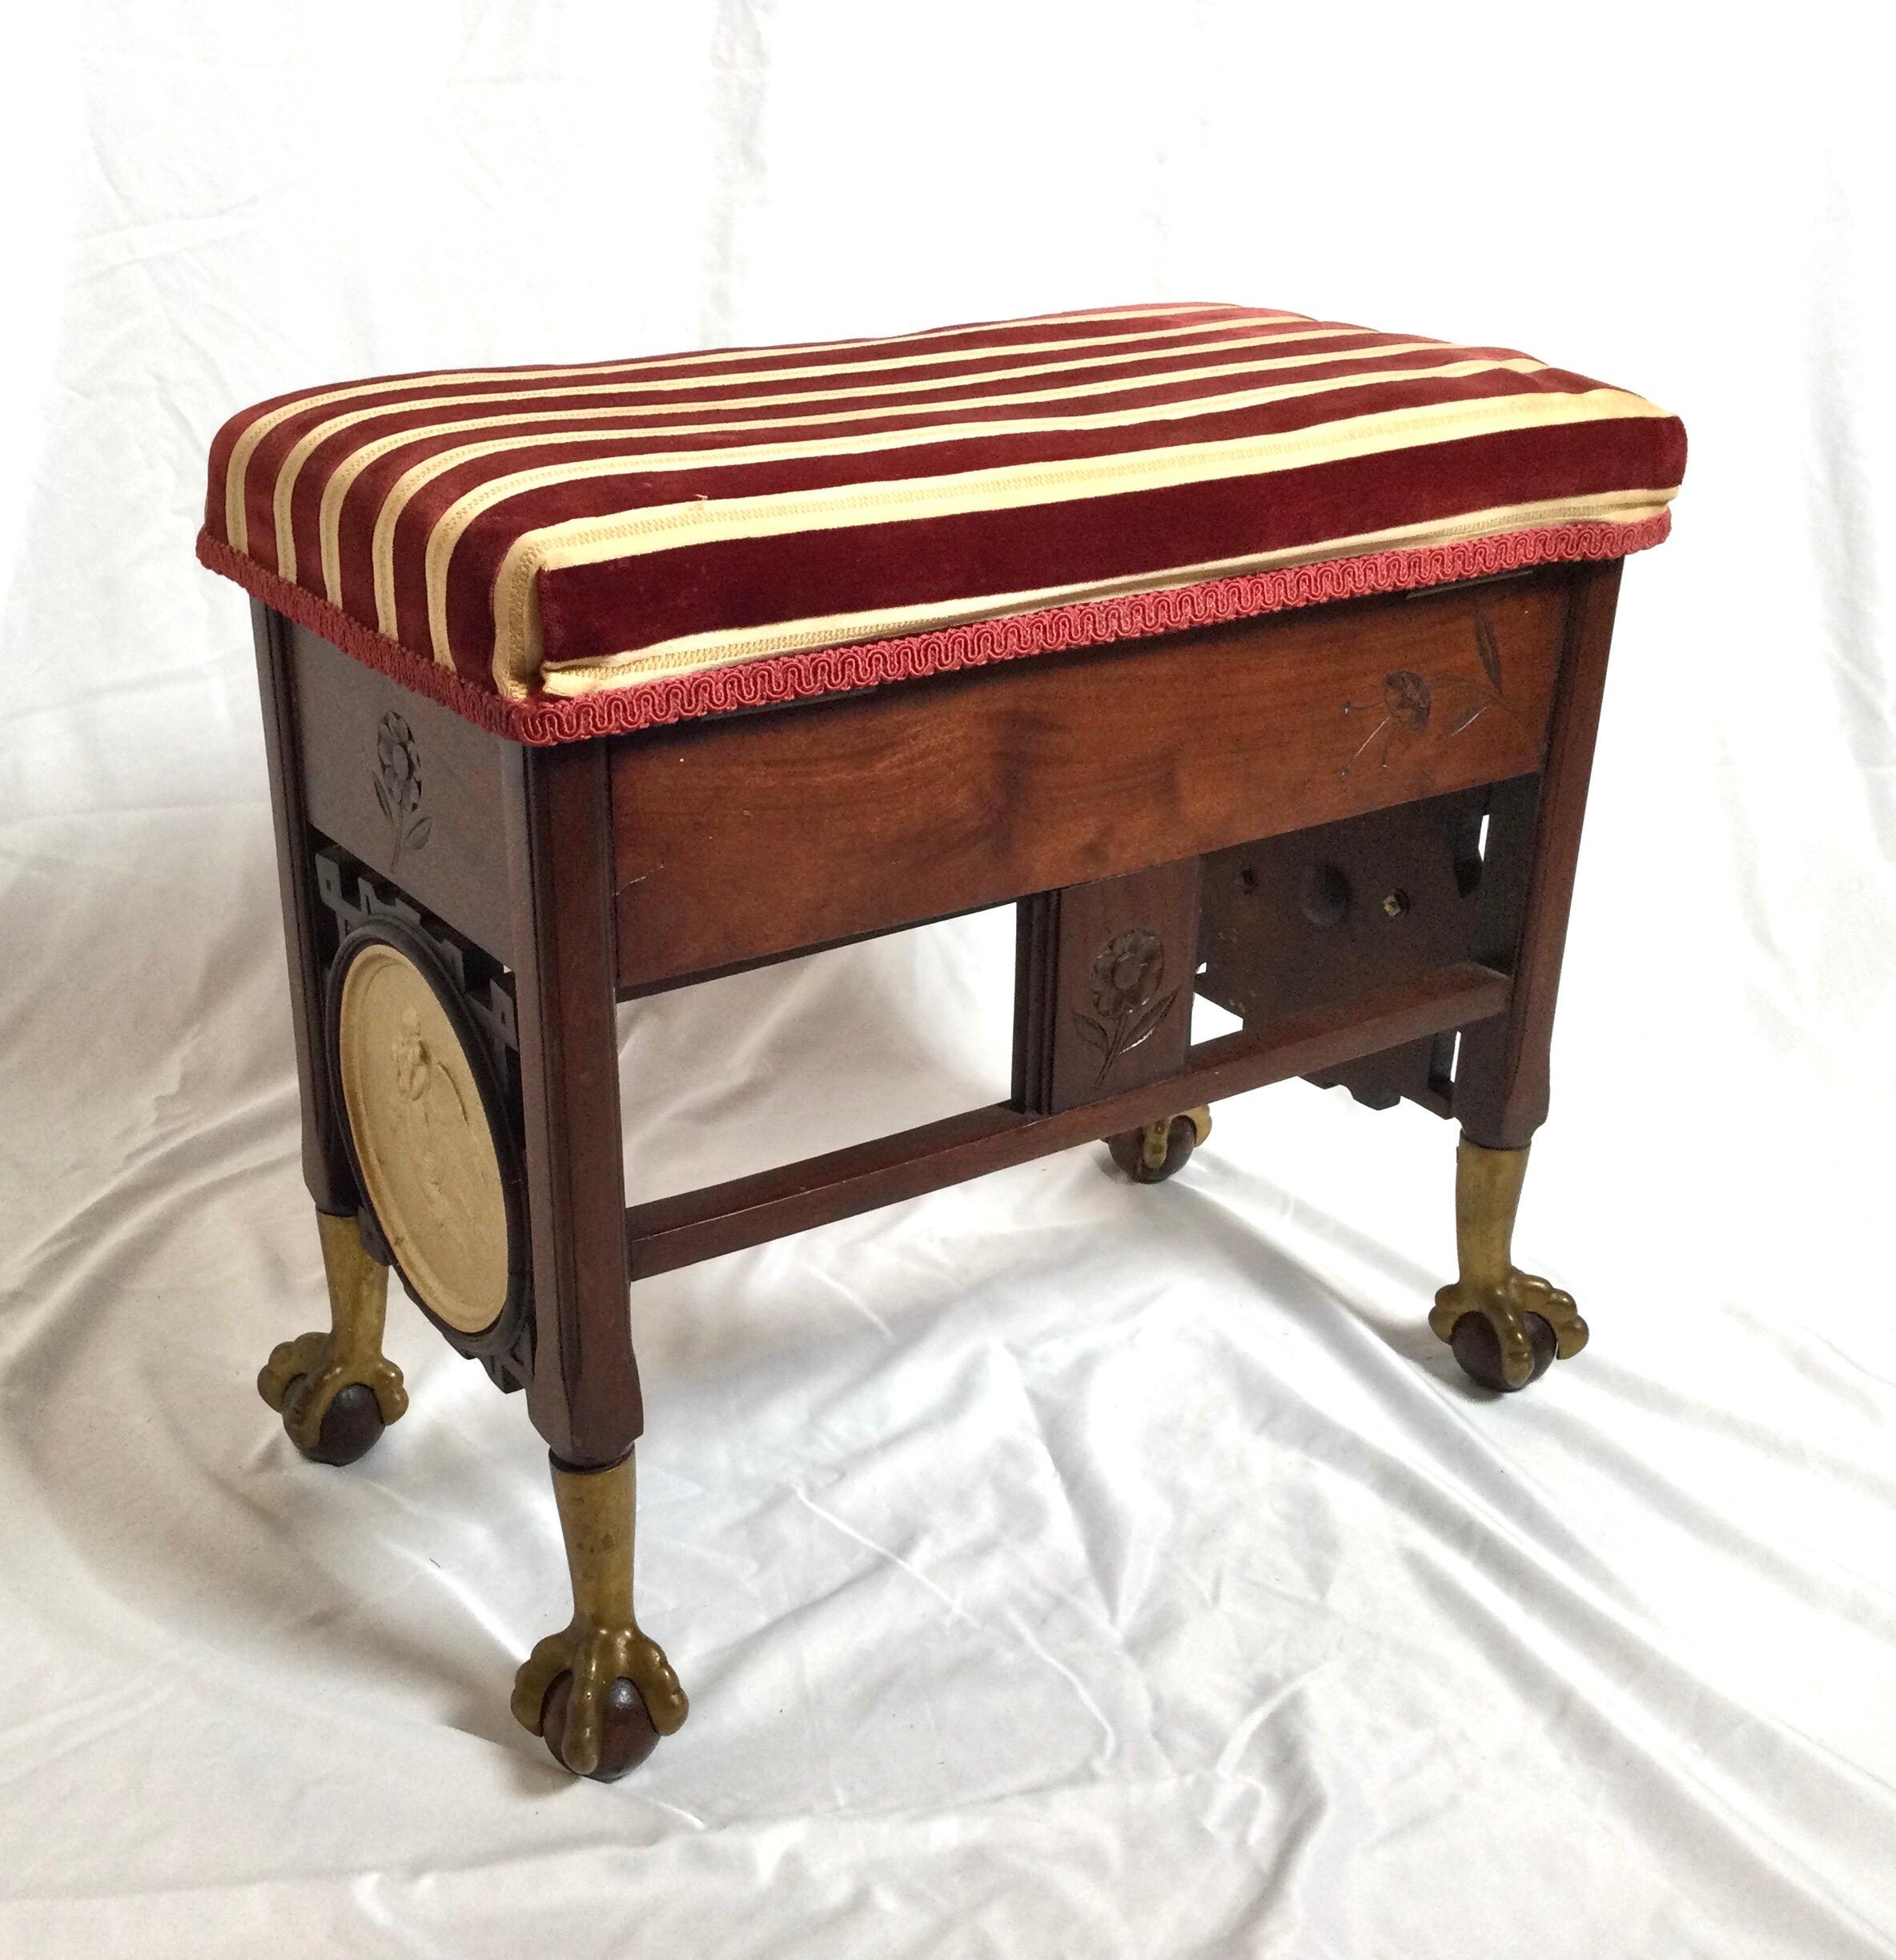 Ormolu A Victorian Aesthetic Movement Lit Top Bench